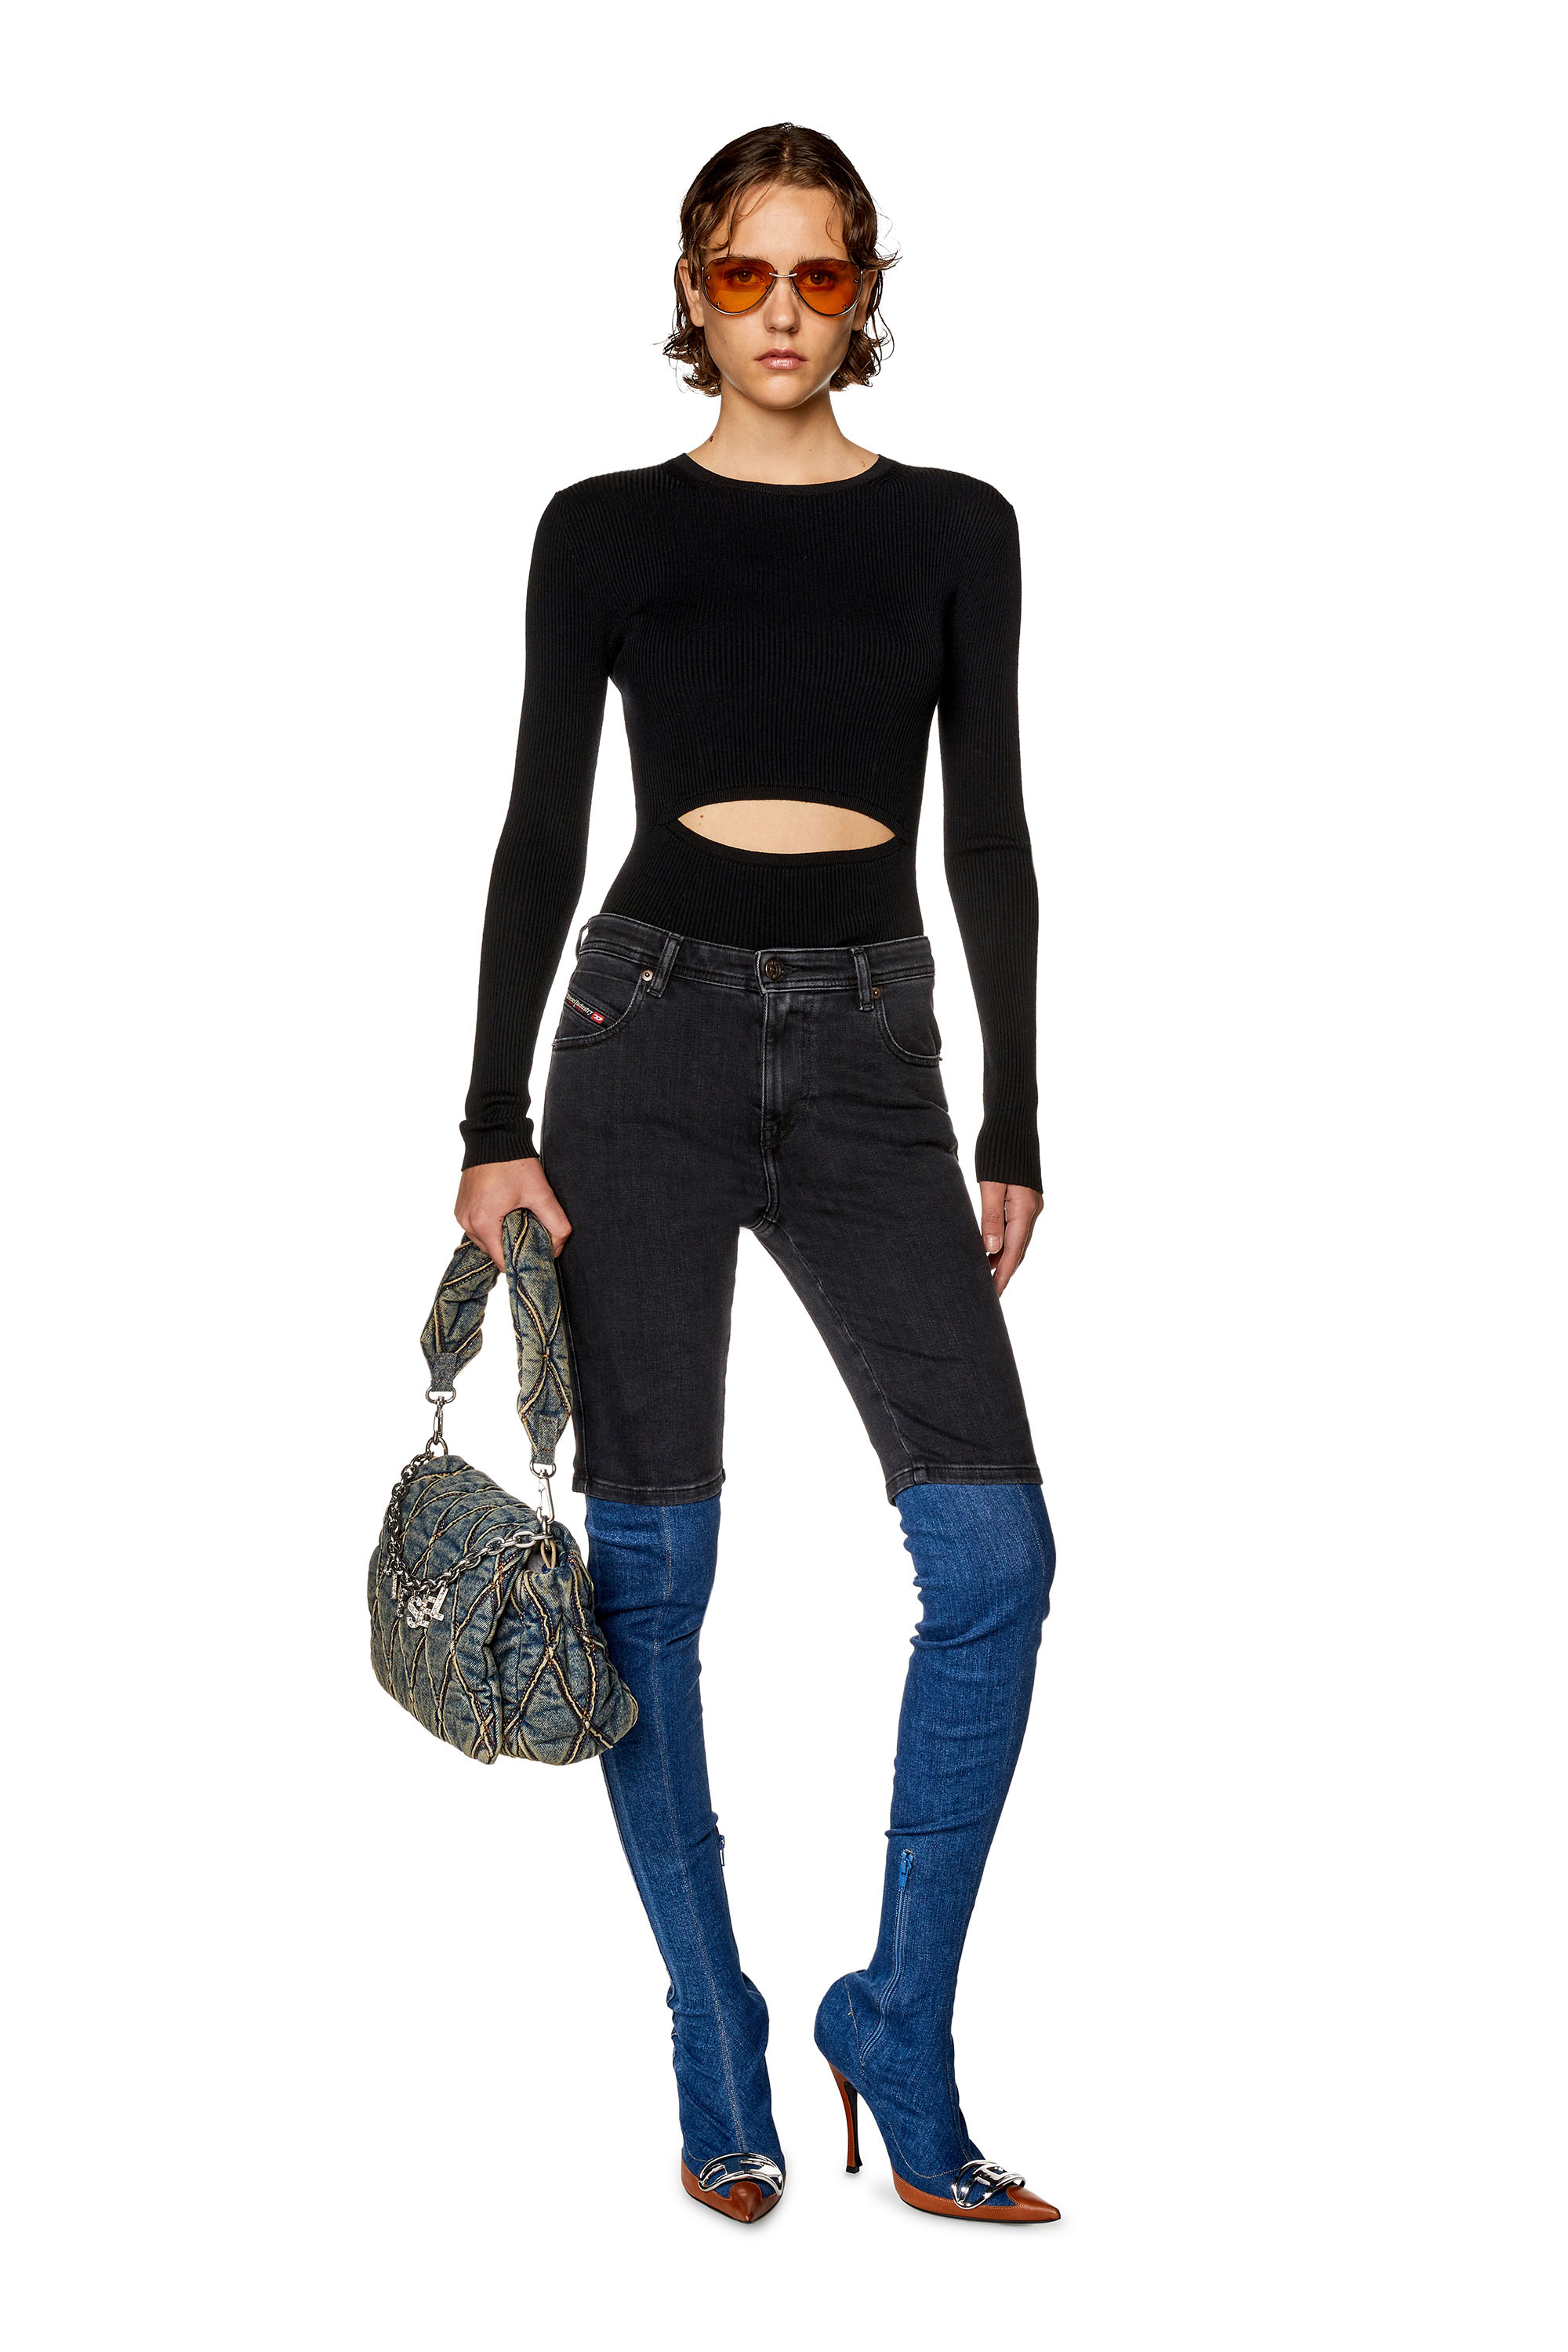 Diesel - M-PERIS, Woman Wool-blend top with cut-out in Black - Image 2